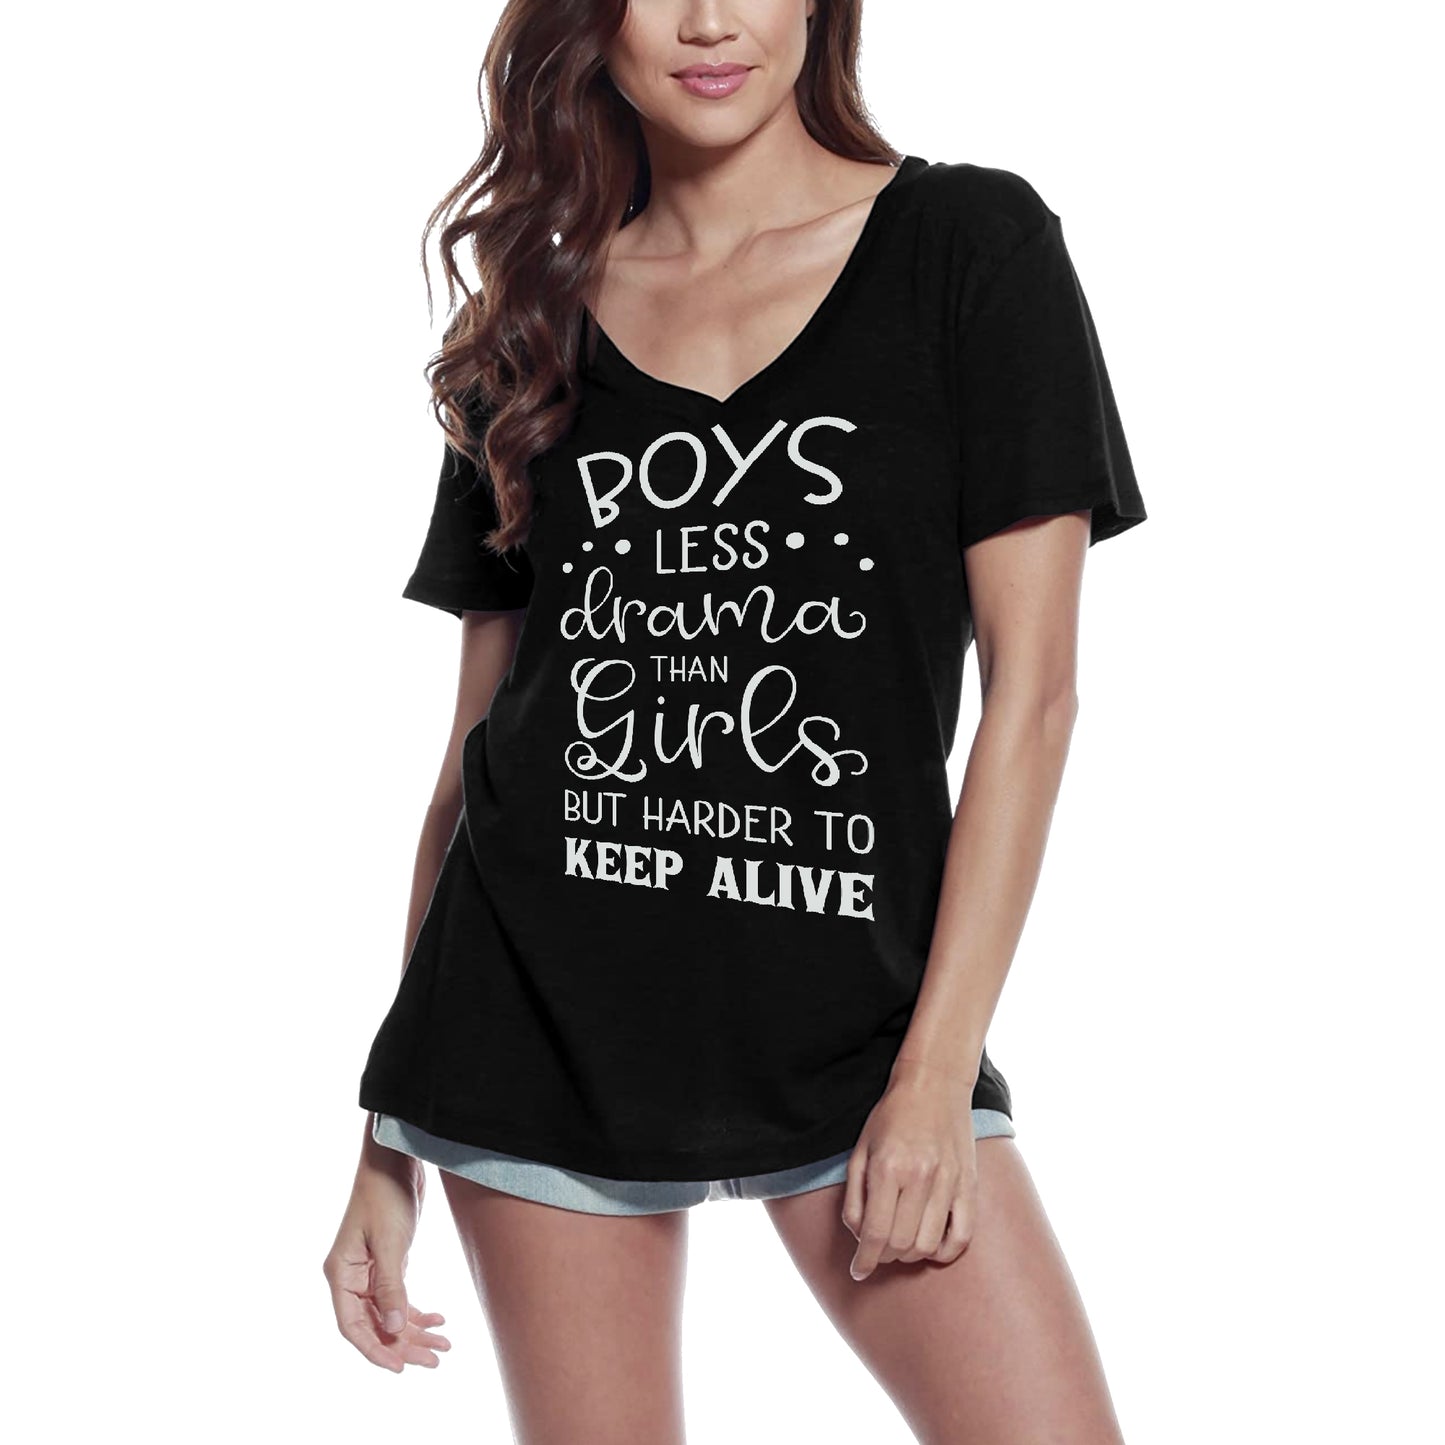 ULTRABASIC Women's T-Shirt Boys Less Drama than Girls - Short Sleeve Tee Shirt Tops